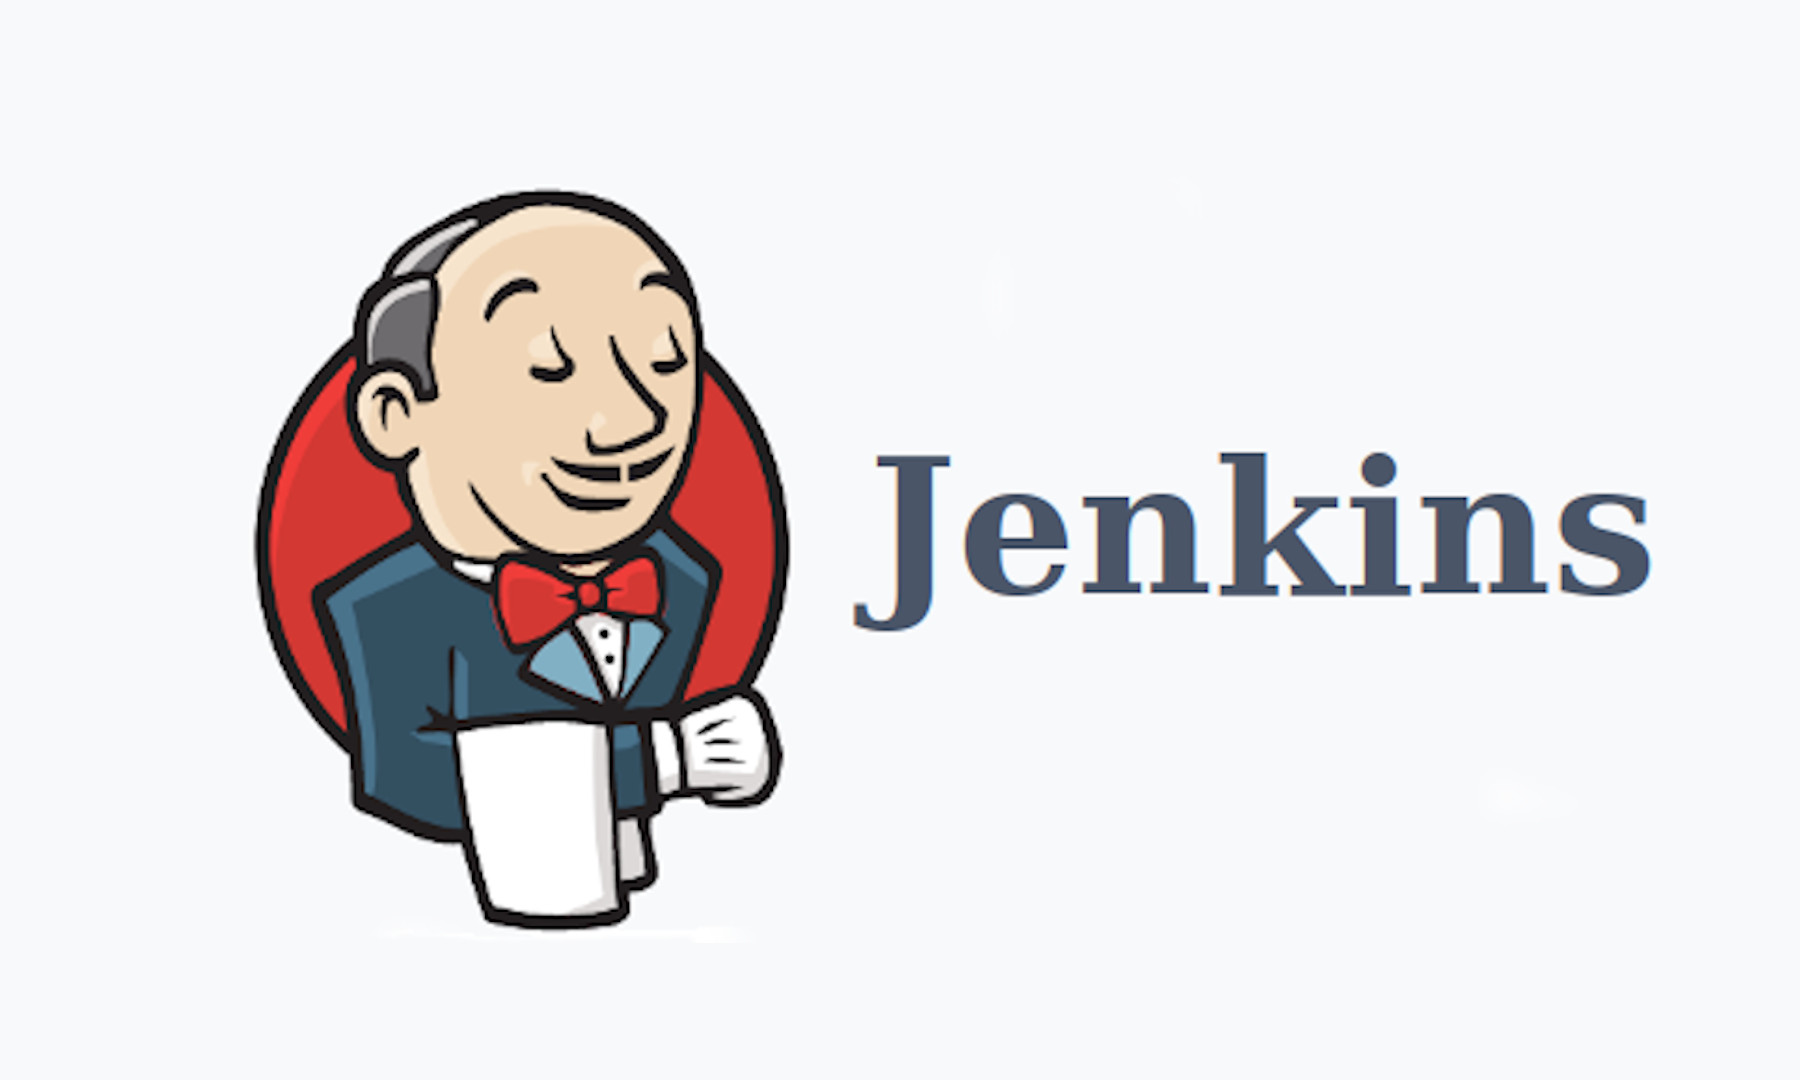  Jenkins 